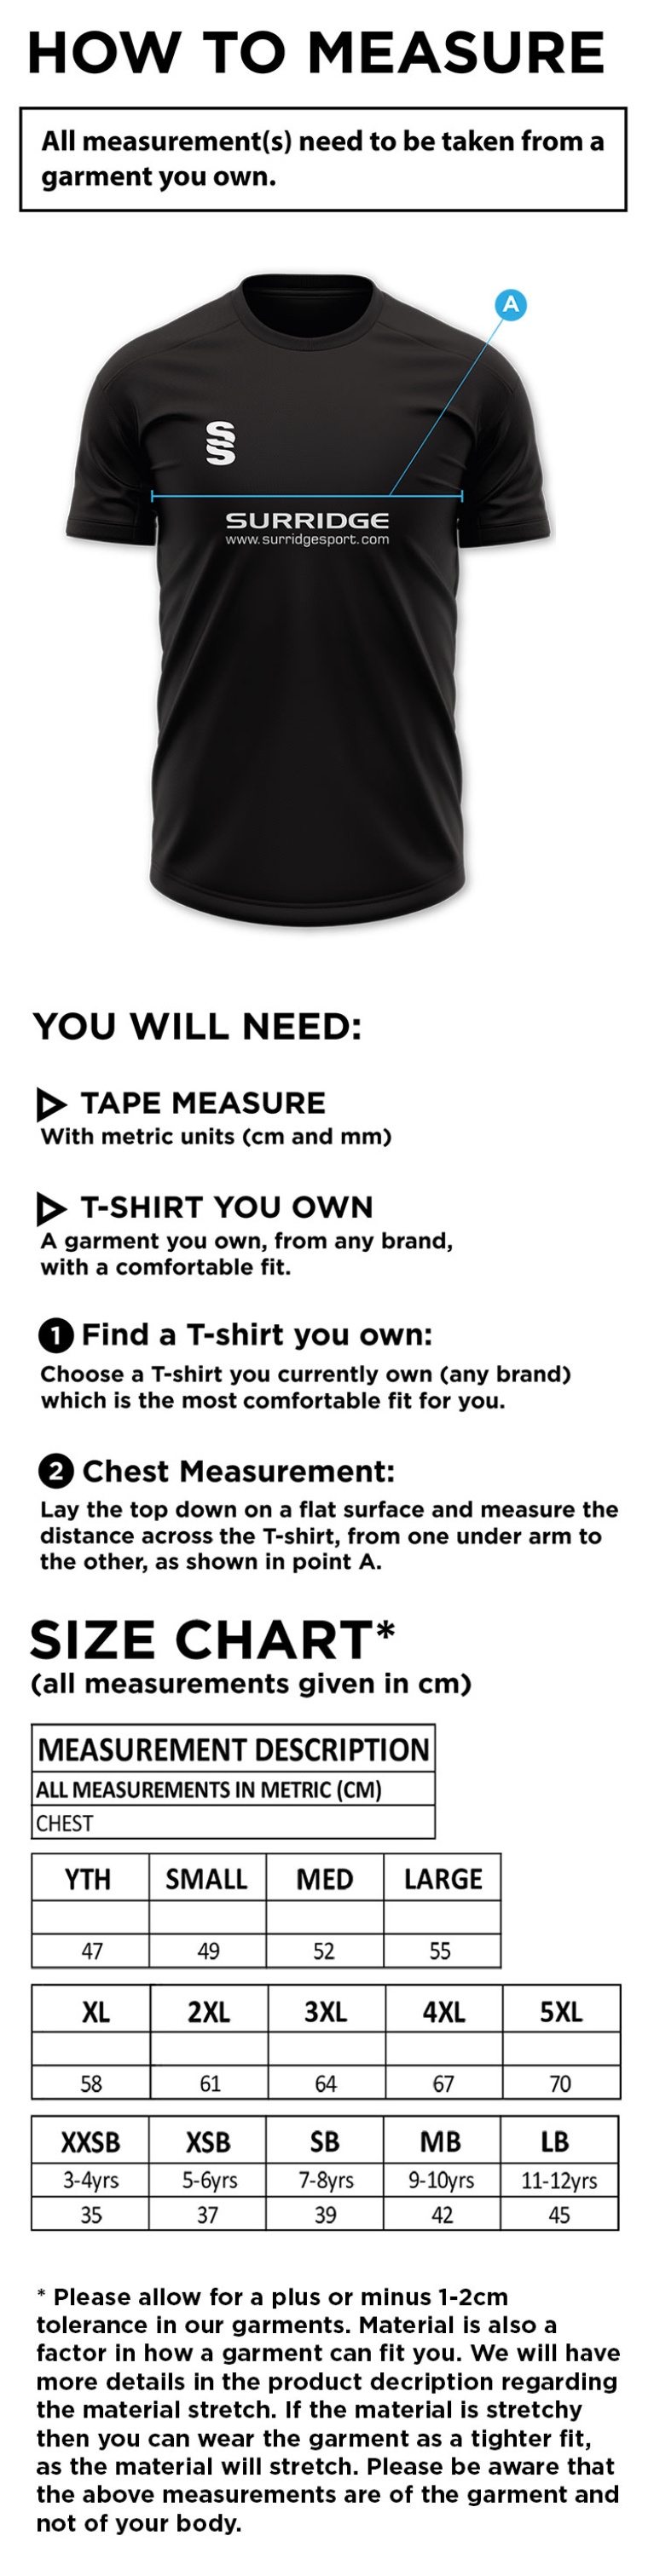 Bentley CC - Dual Gym T-shirt - Size Guide